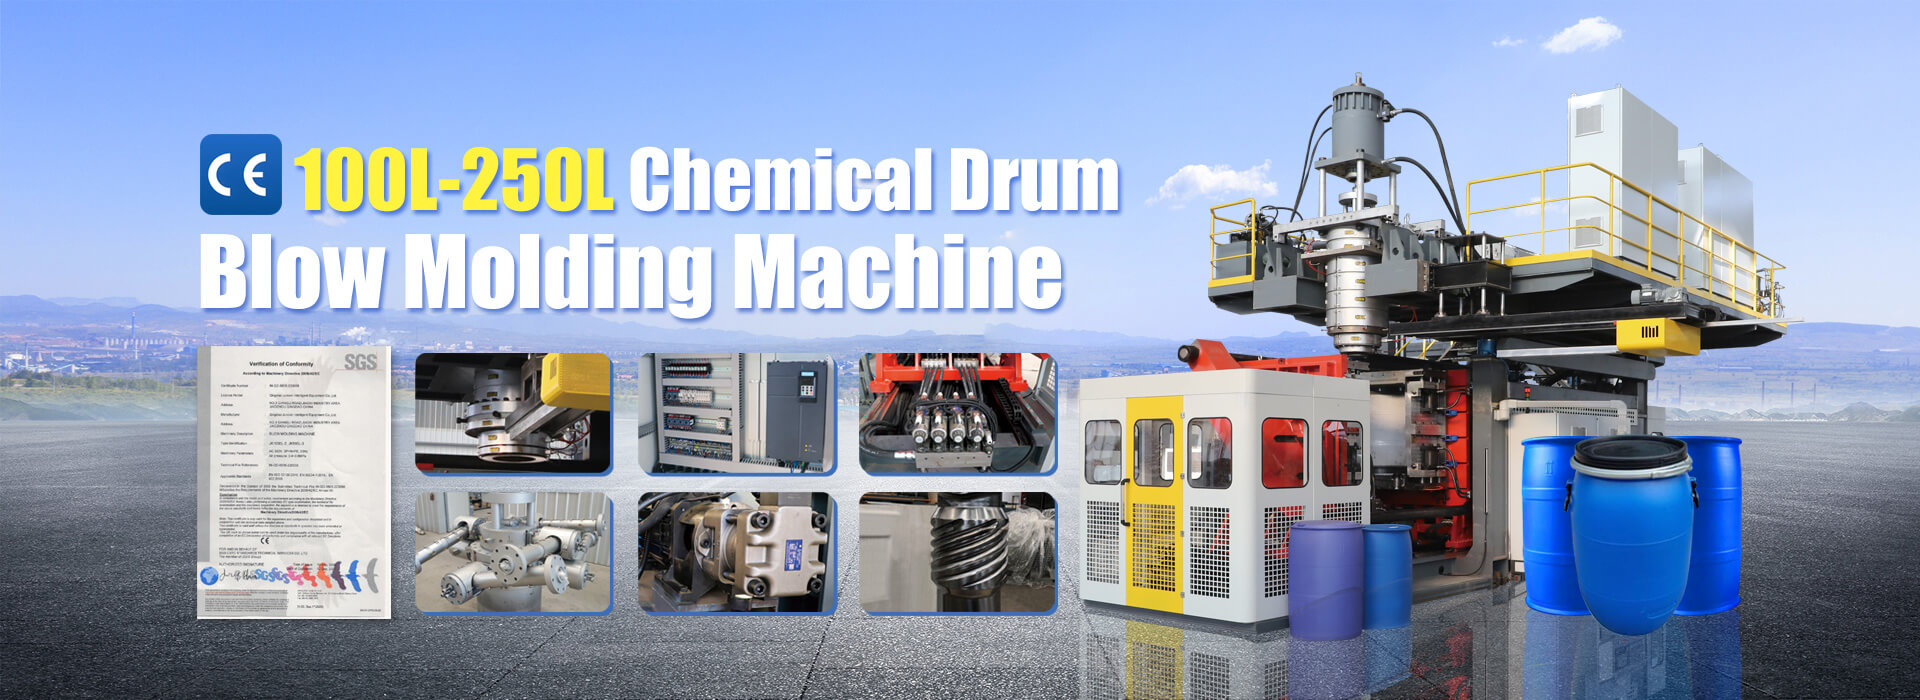 Chemical Drum Blow Molding Machine